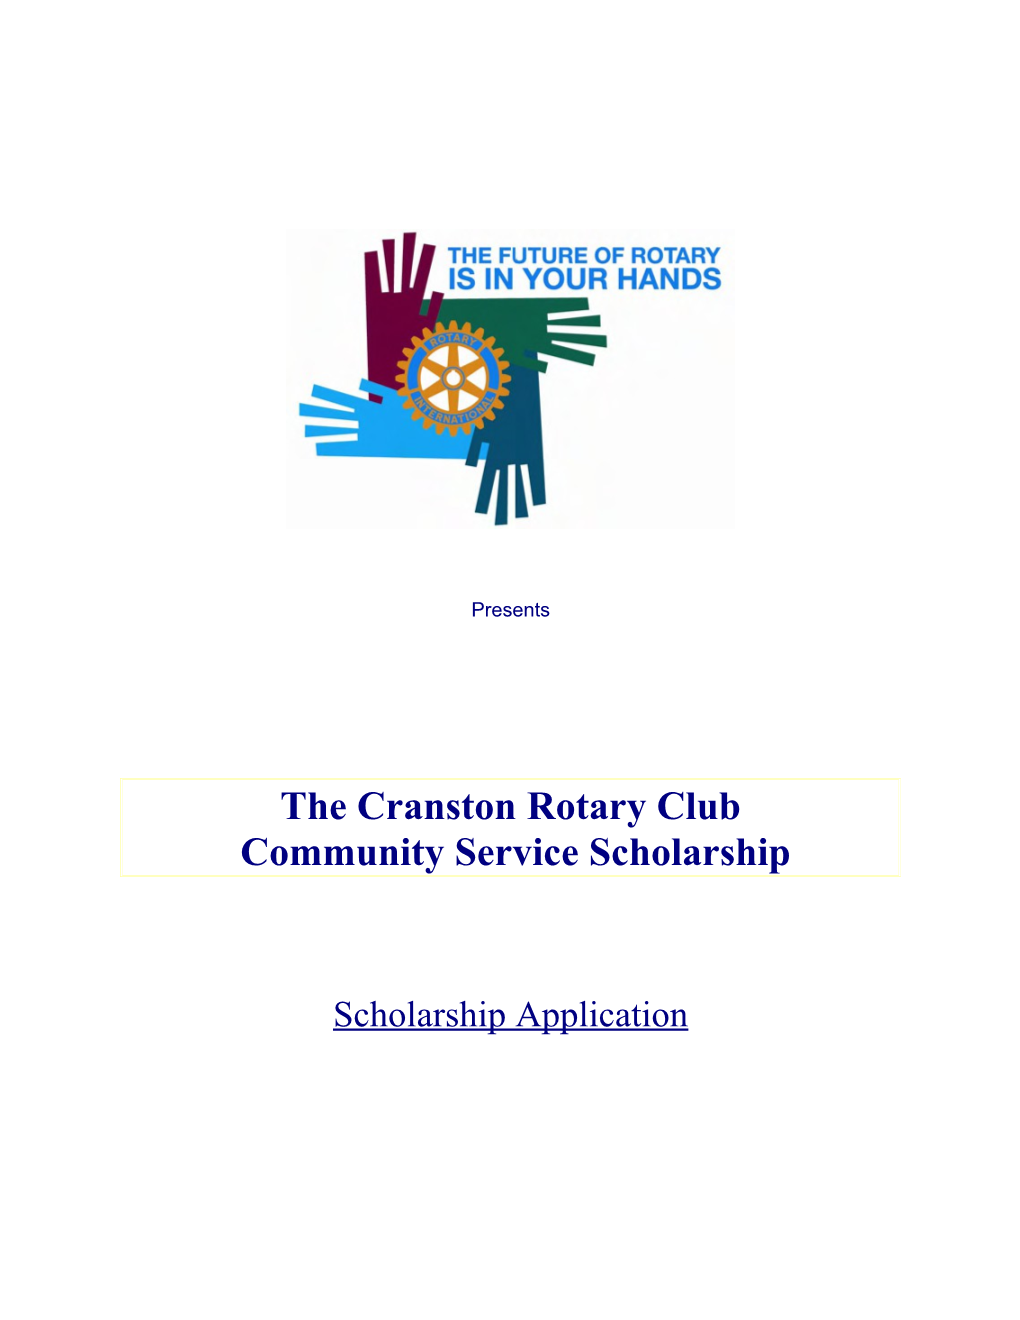 The Cranston Rotary Club